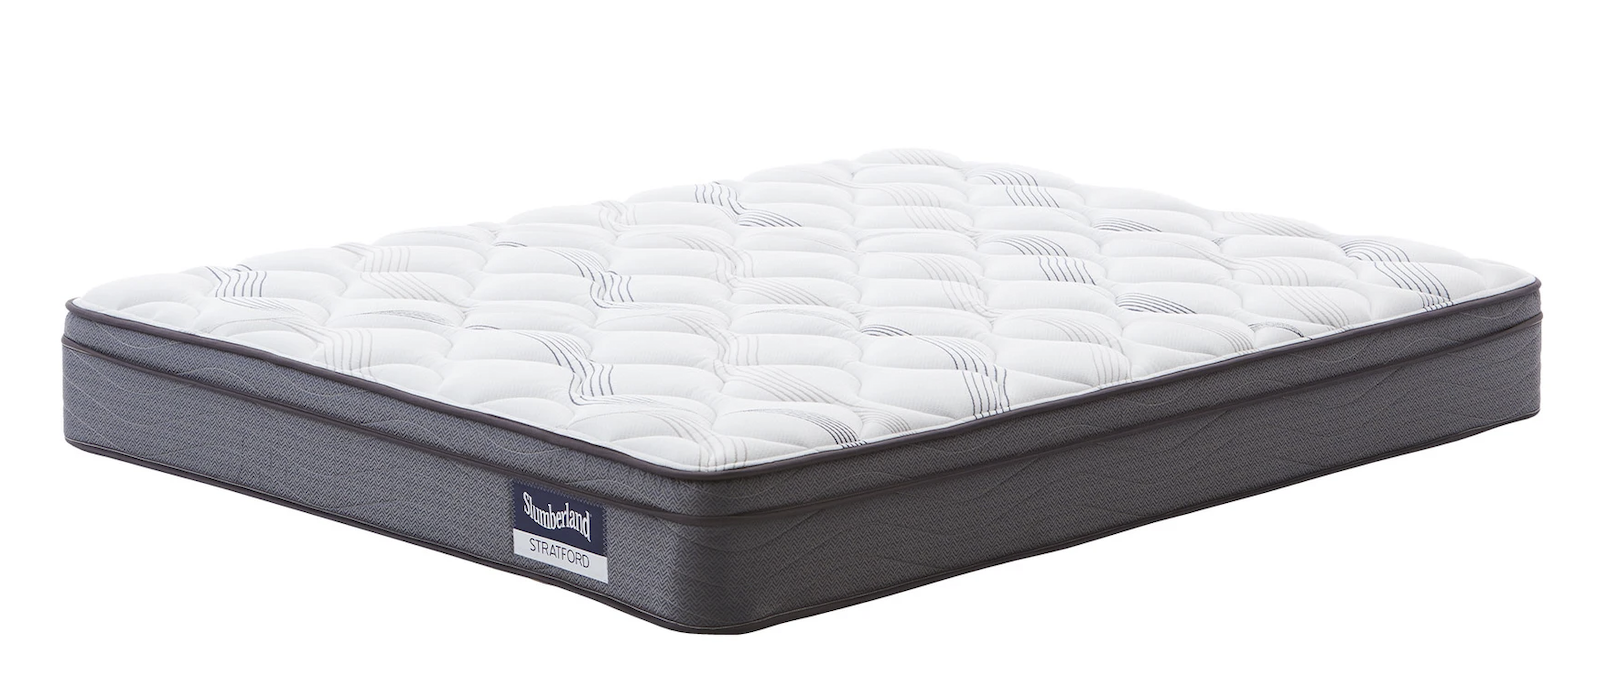 slumberland stratford mattress review